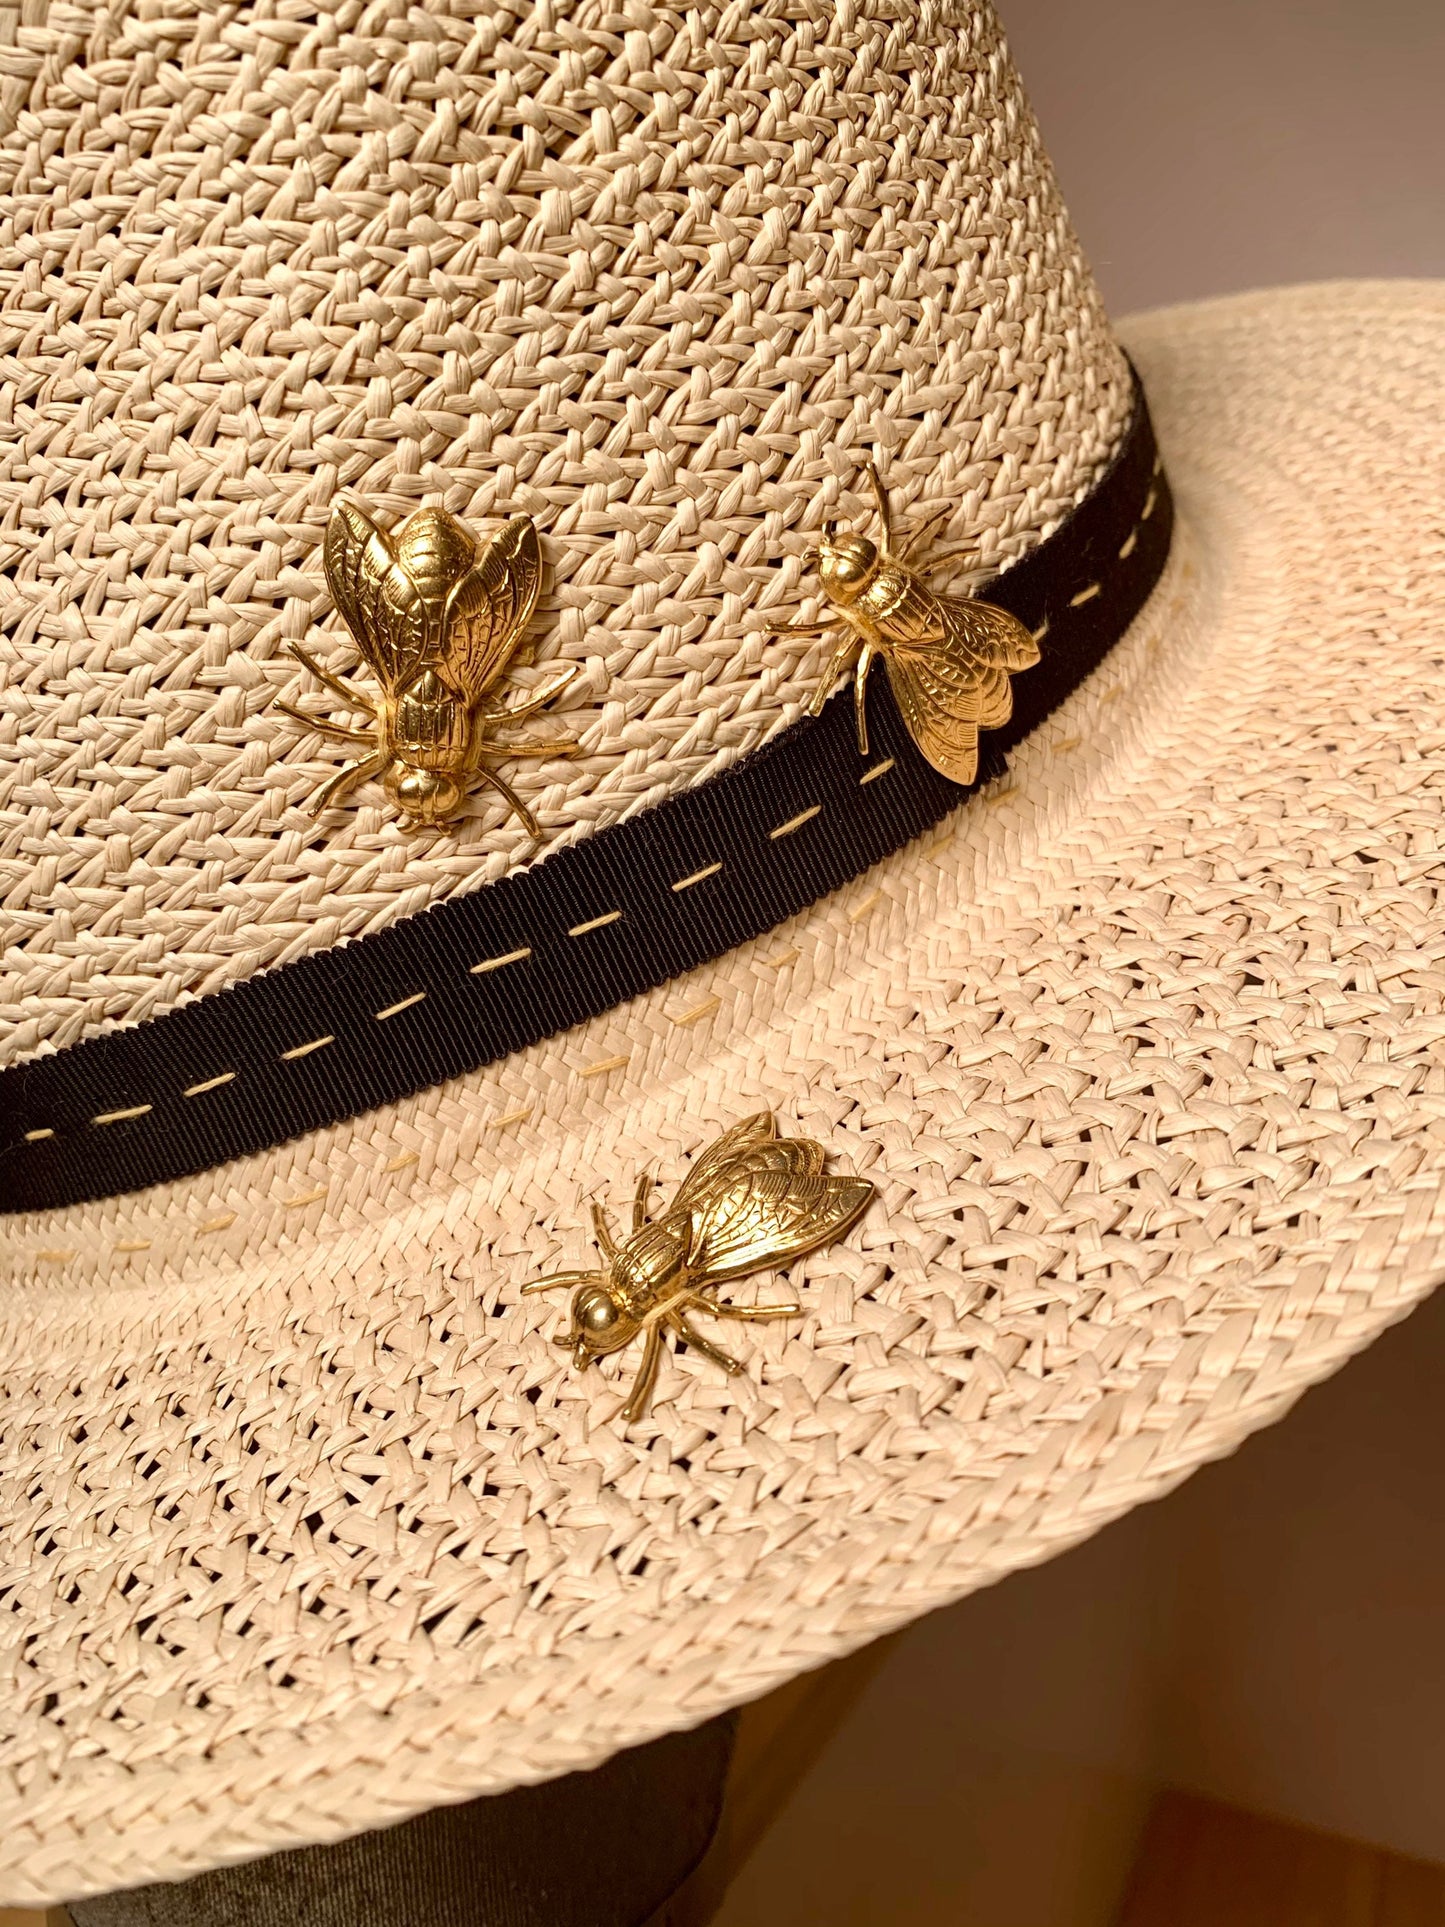 Natural Straw Fedora-Gold Bees adornments-Go To Hat-Summer Fedora-Everyday Hat-Unisex Hat-Travel Hat-Custom Made Straw Fedora-Straw Hat